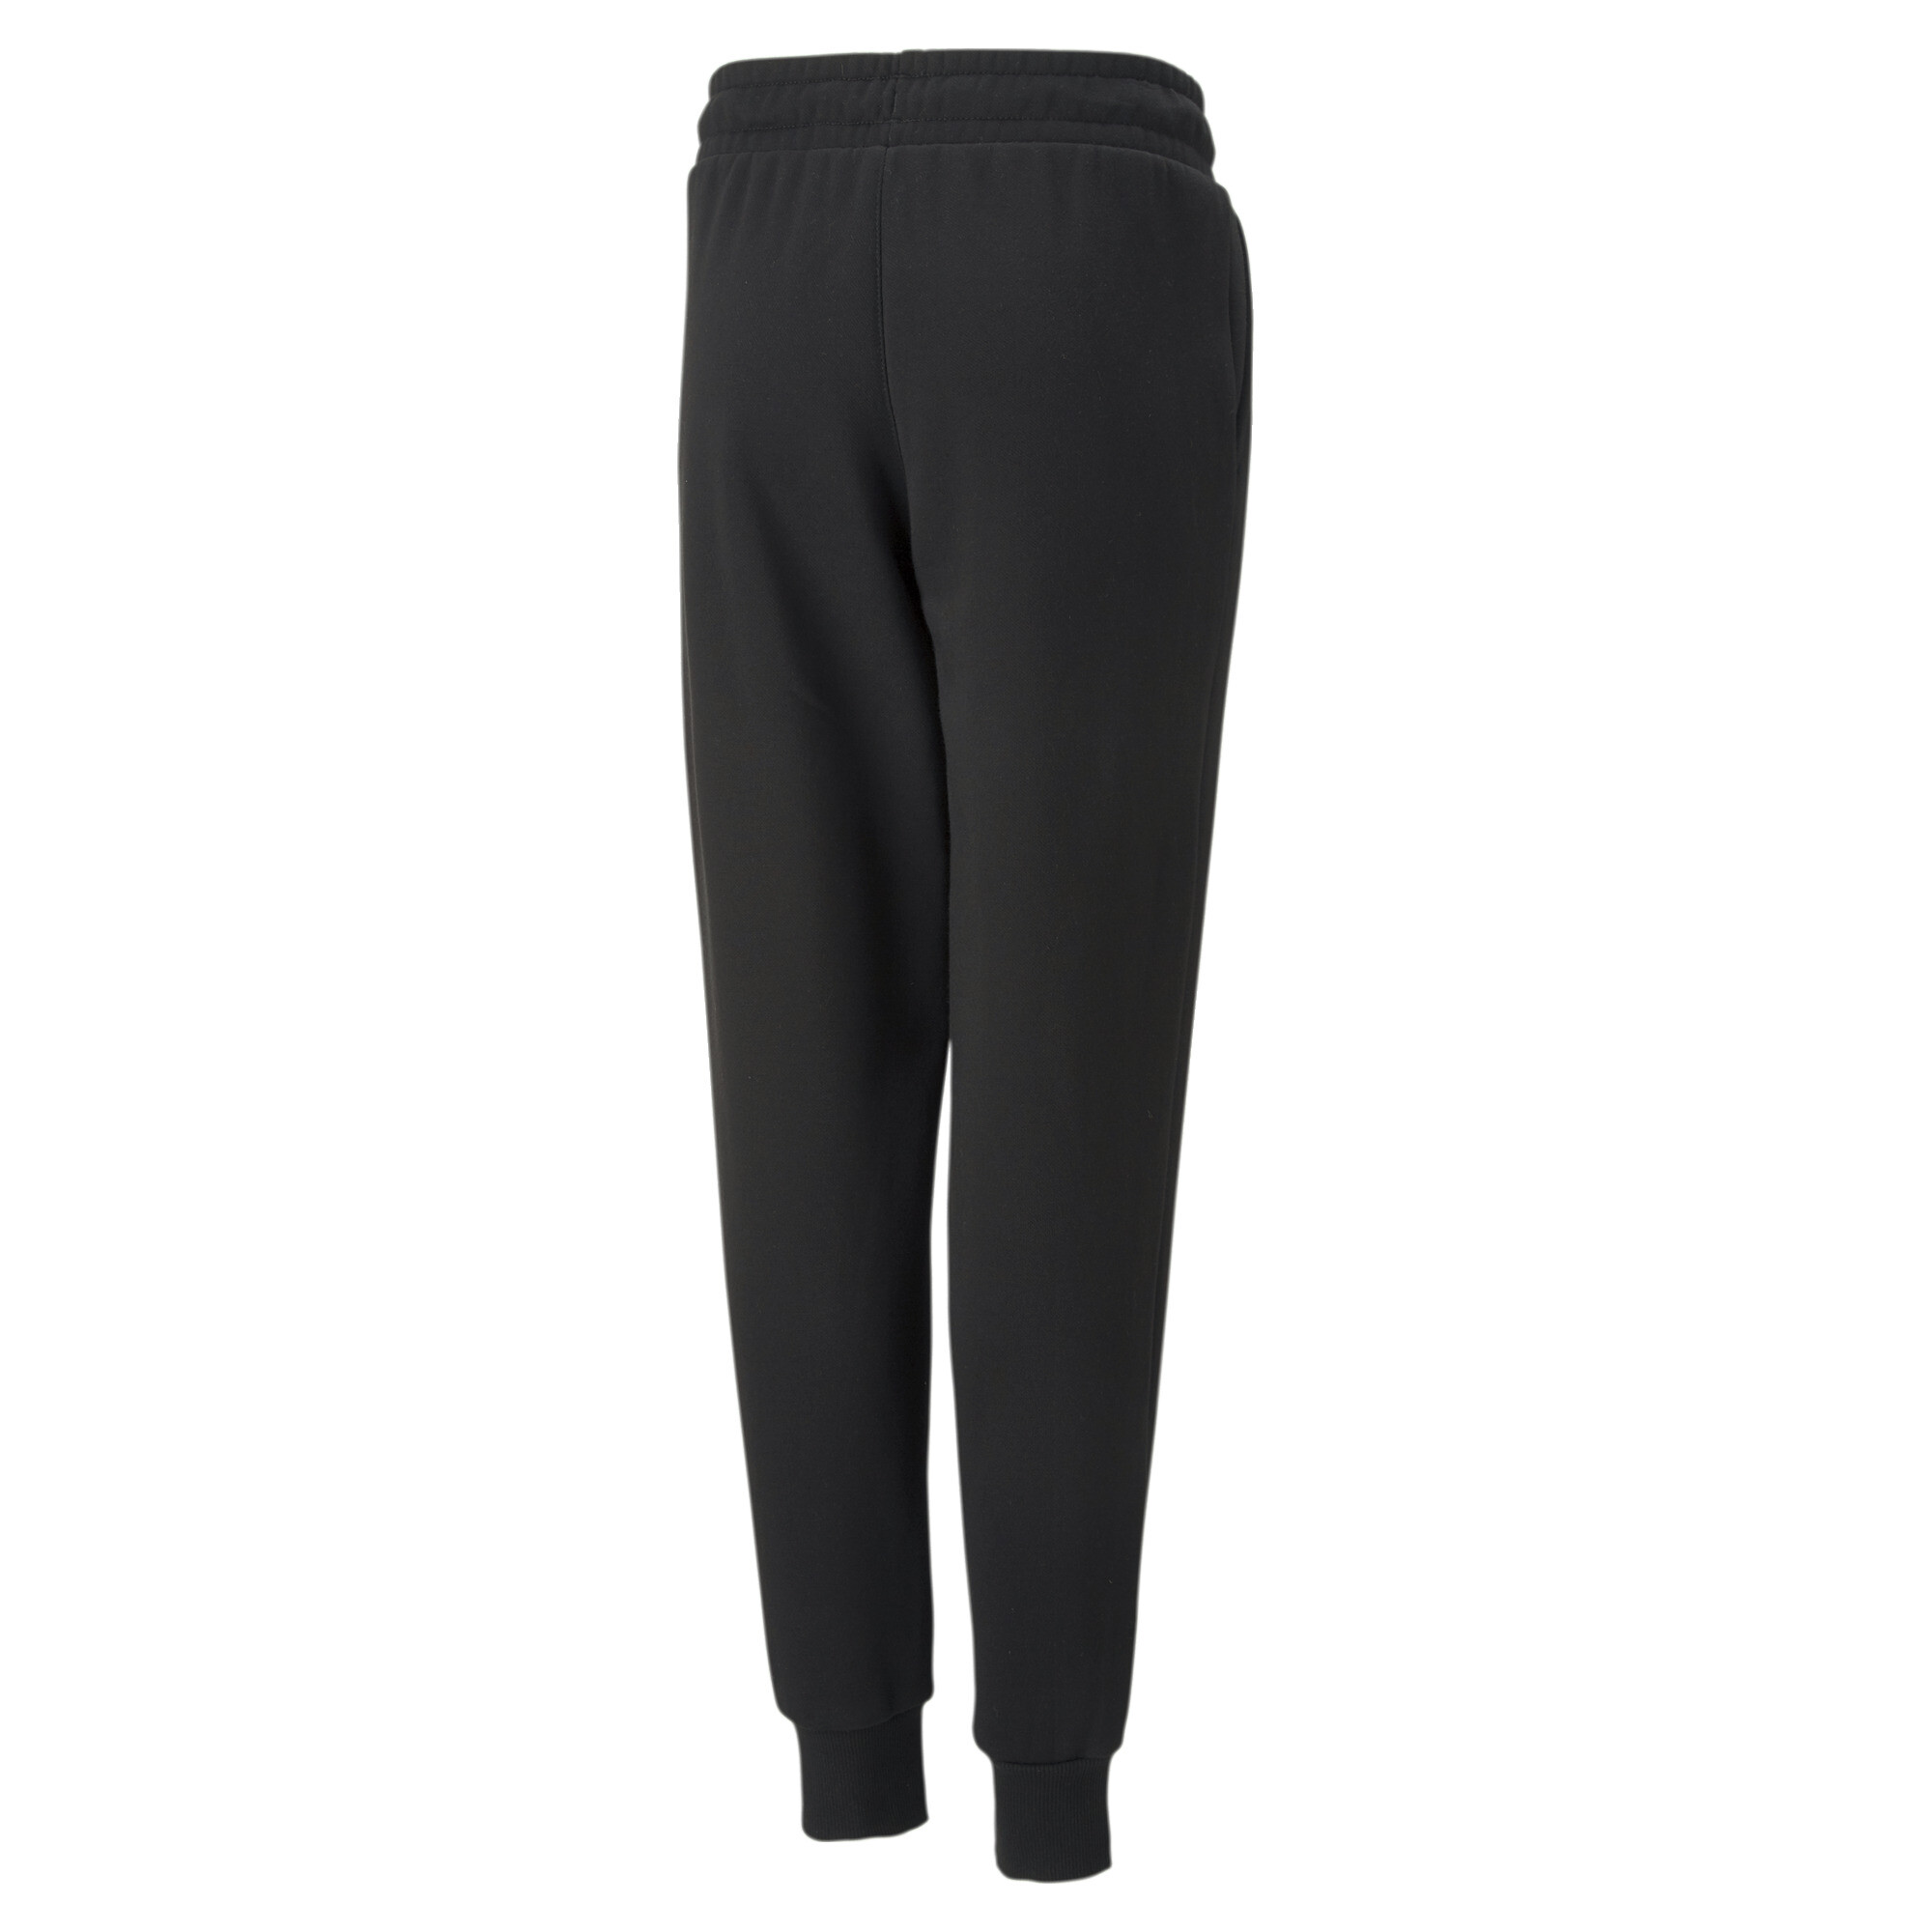 PUMA Alpha Sweatpants In Black, Size 3-4 Youth